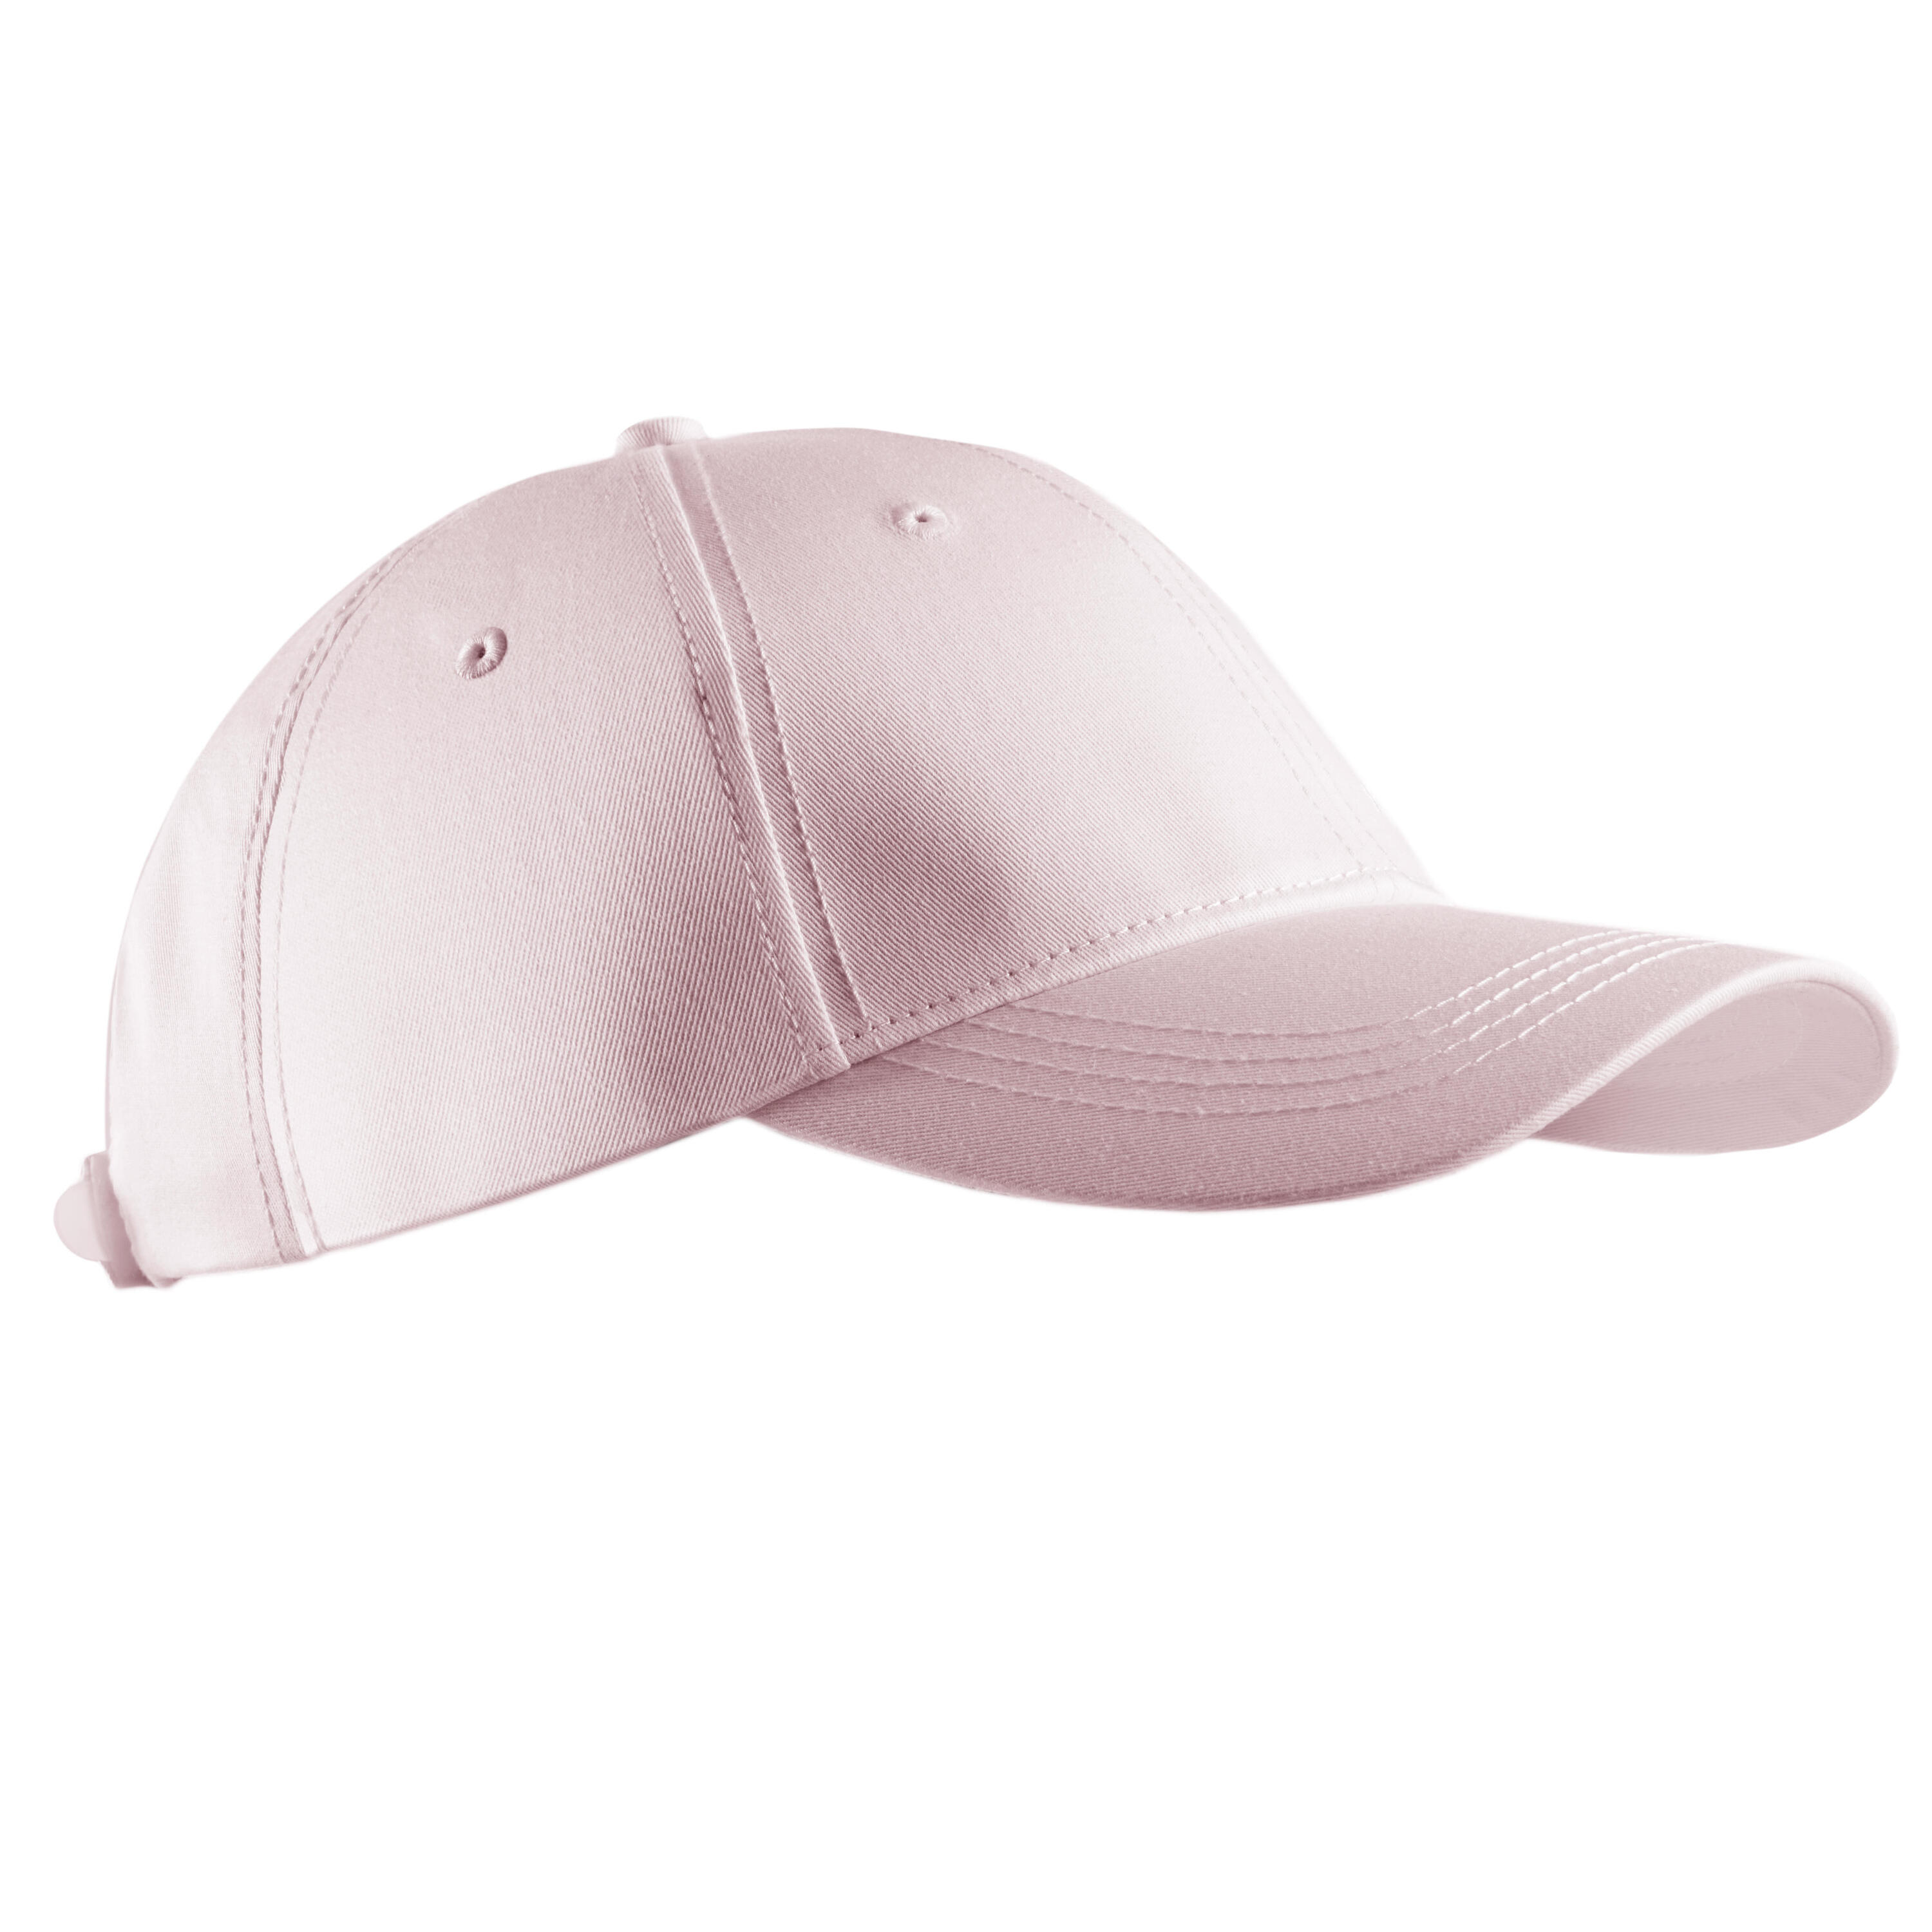 Adult's golf cap - MW 500 pink 2/3